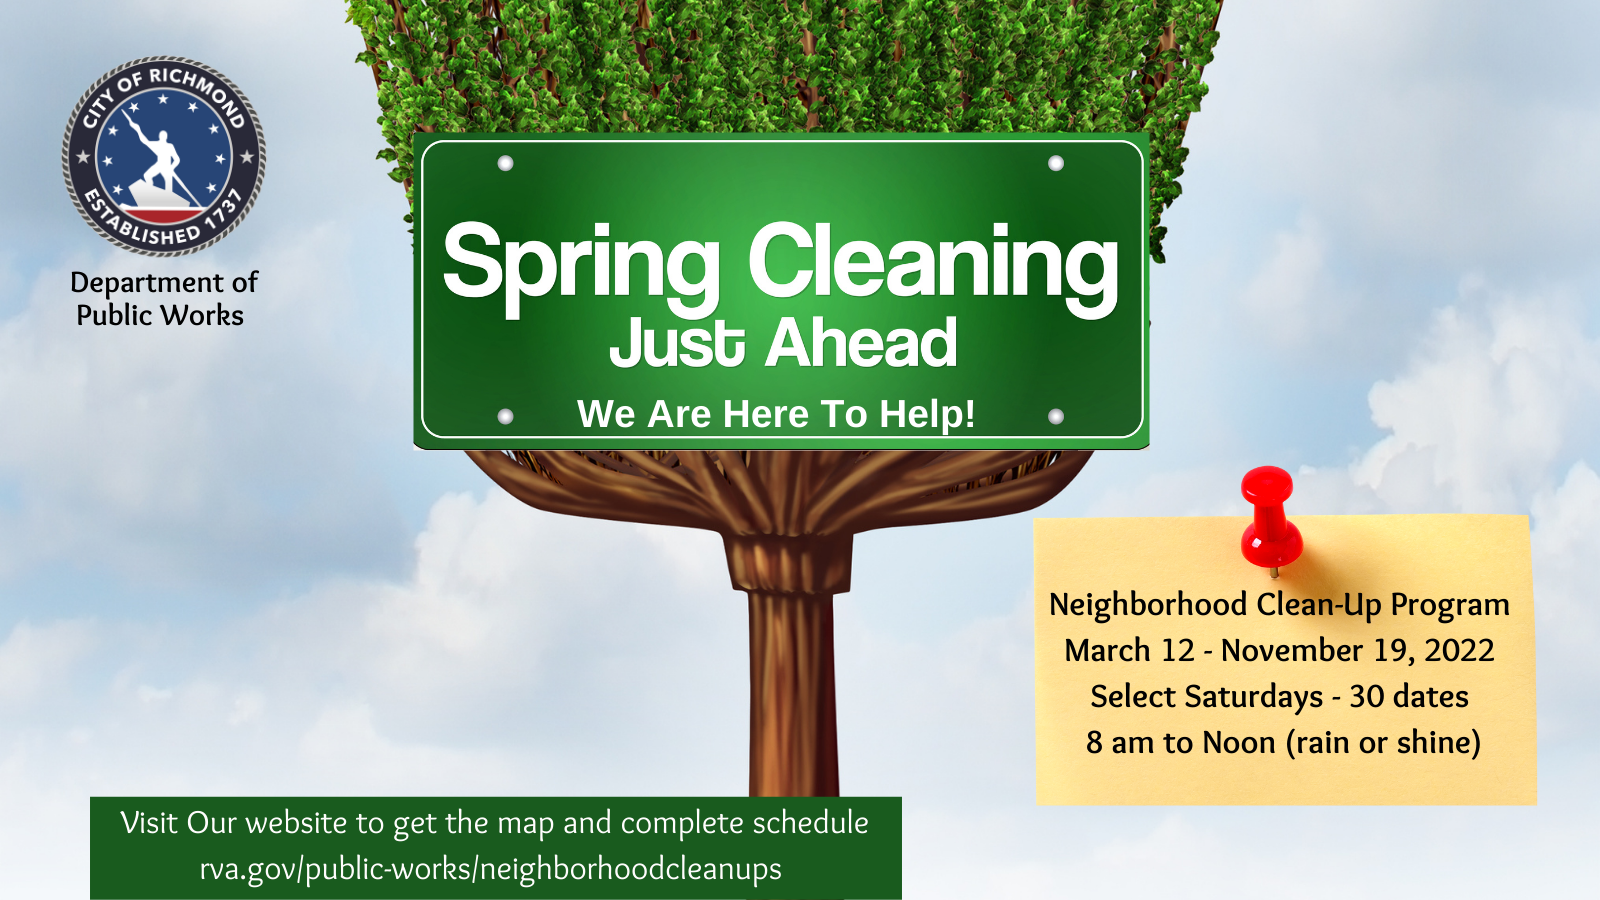 Image - Neighborhood Clean-Up Program Information